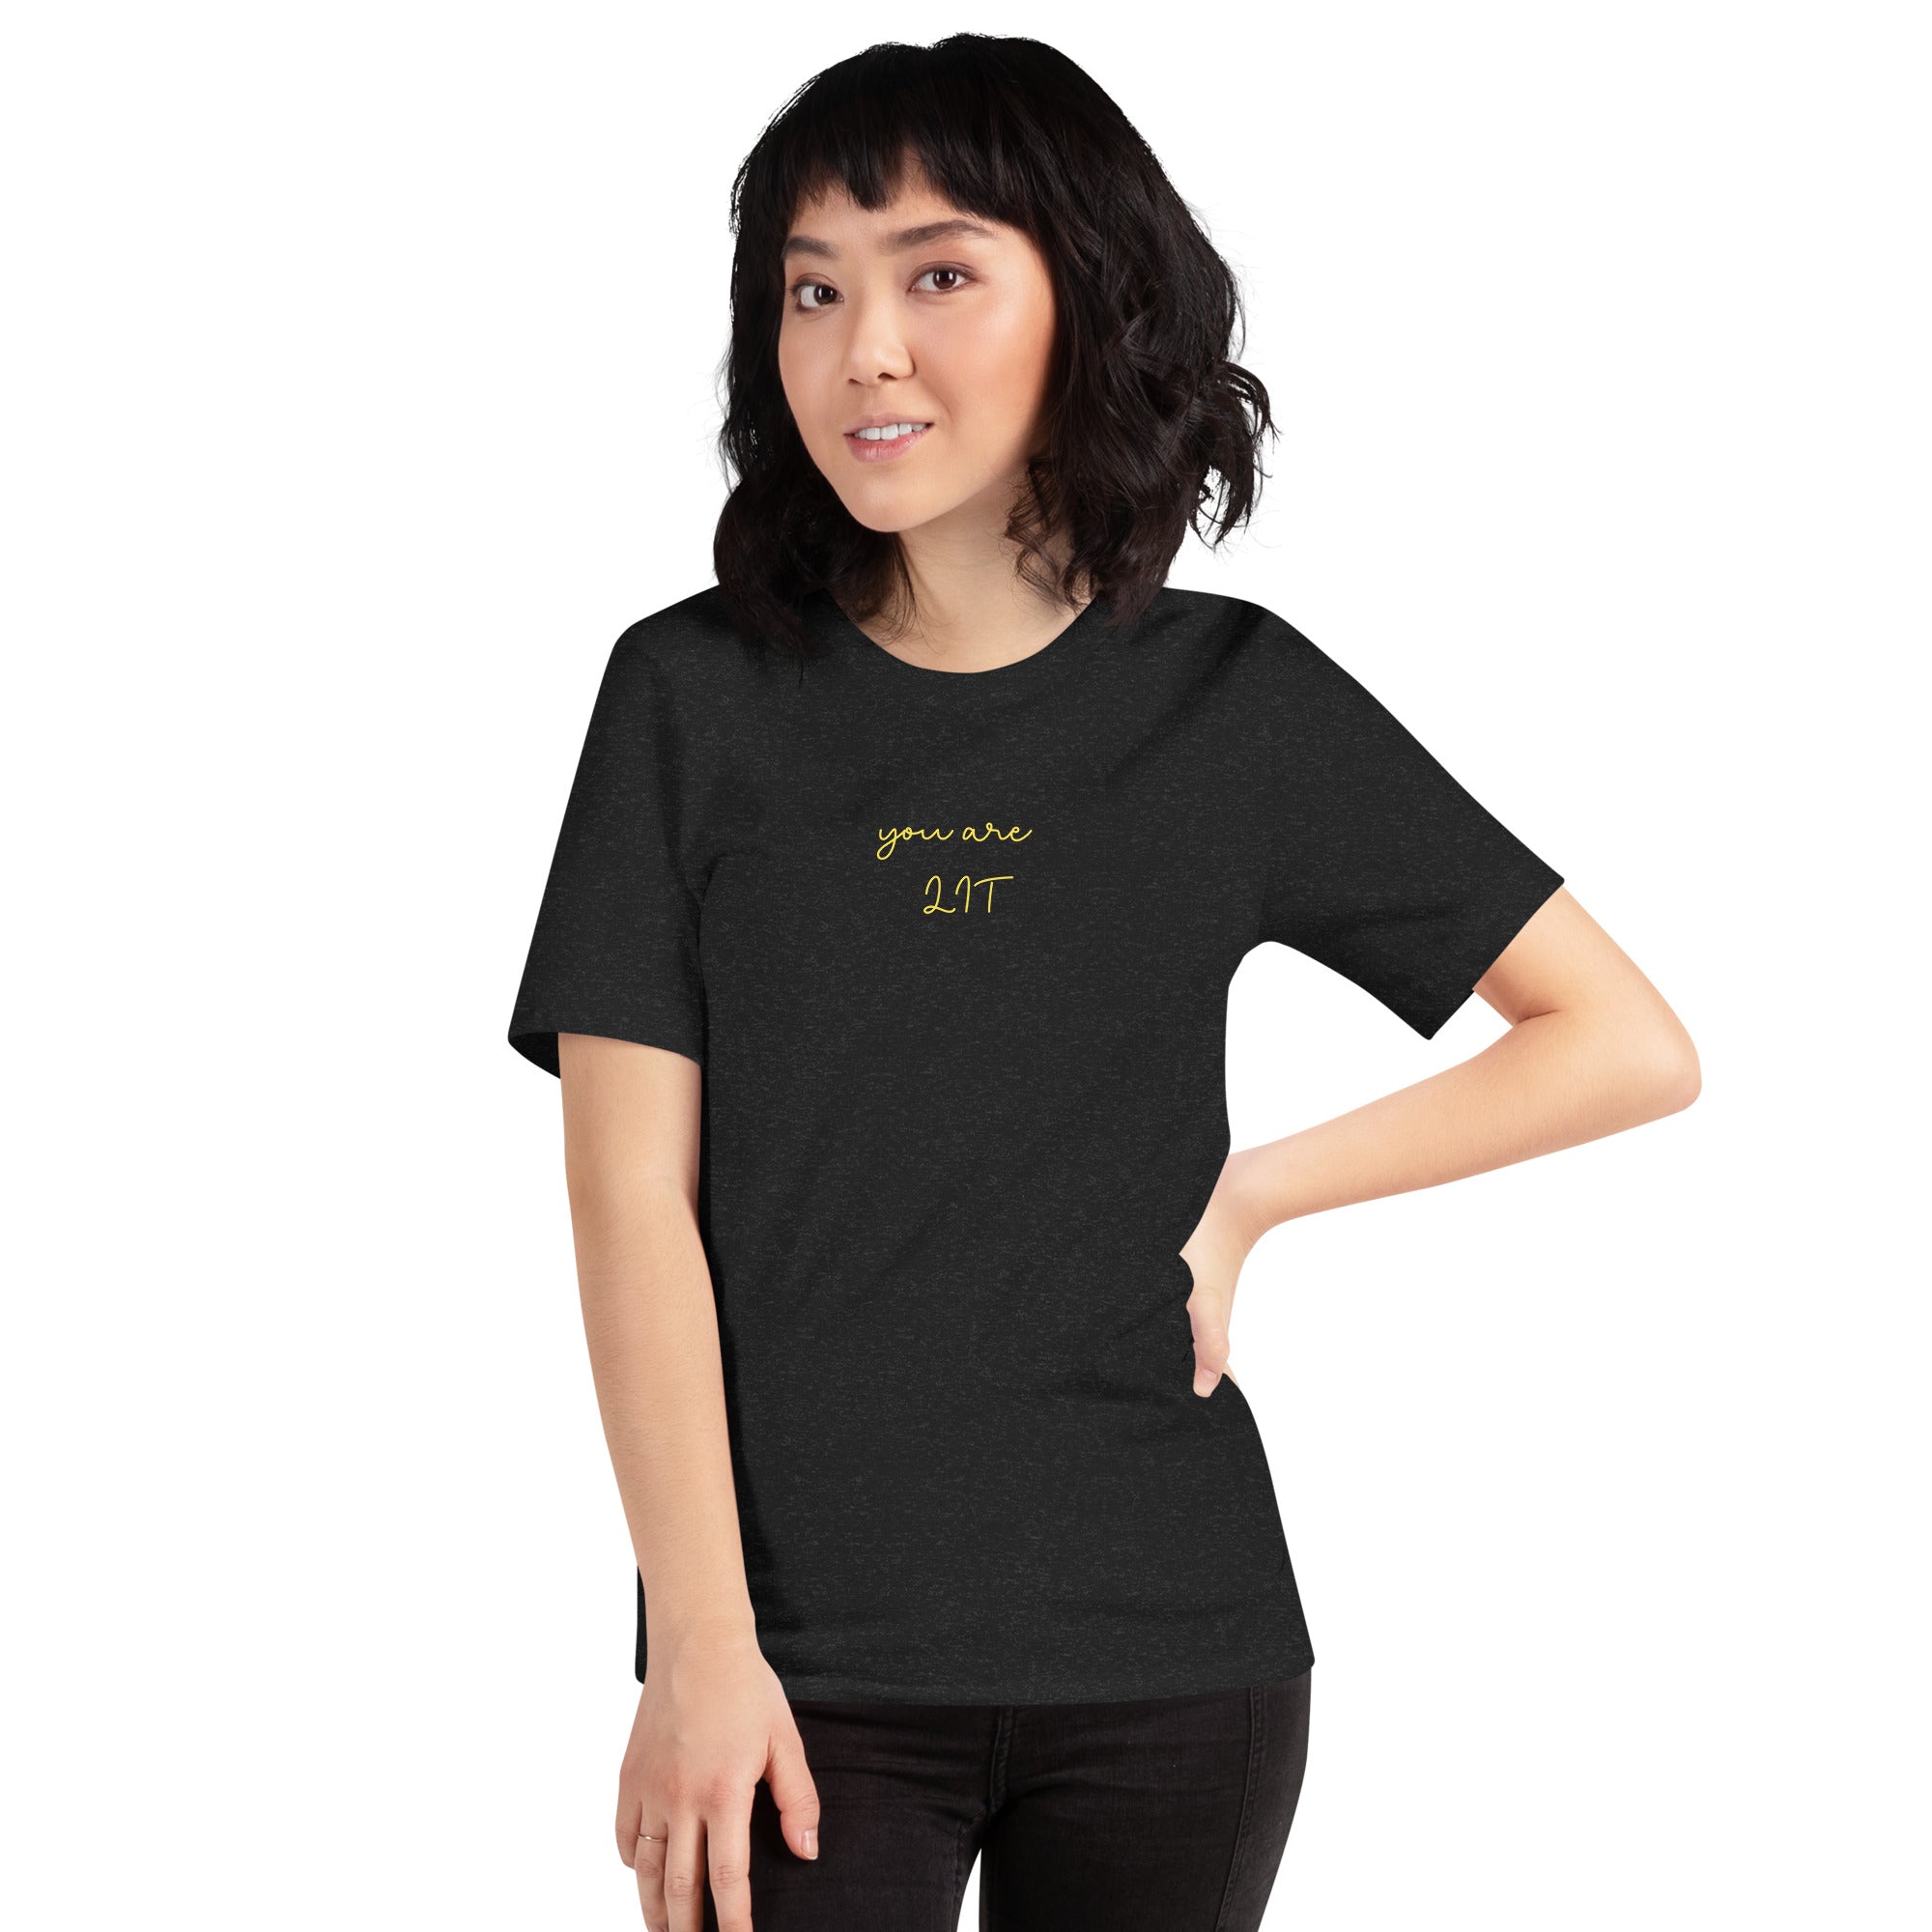 You Are Lit, Premium Short-Sleeve Unisex T-Shirt | Positive Affirmation Tee